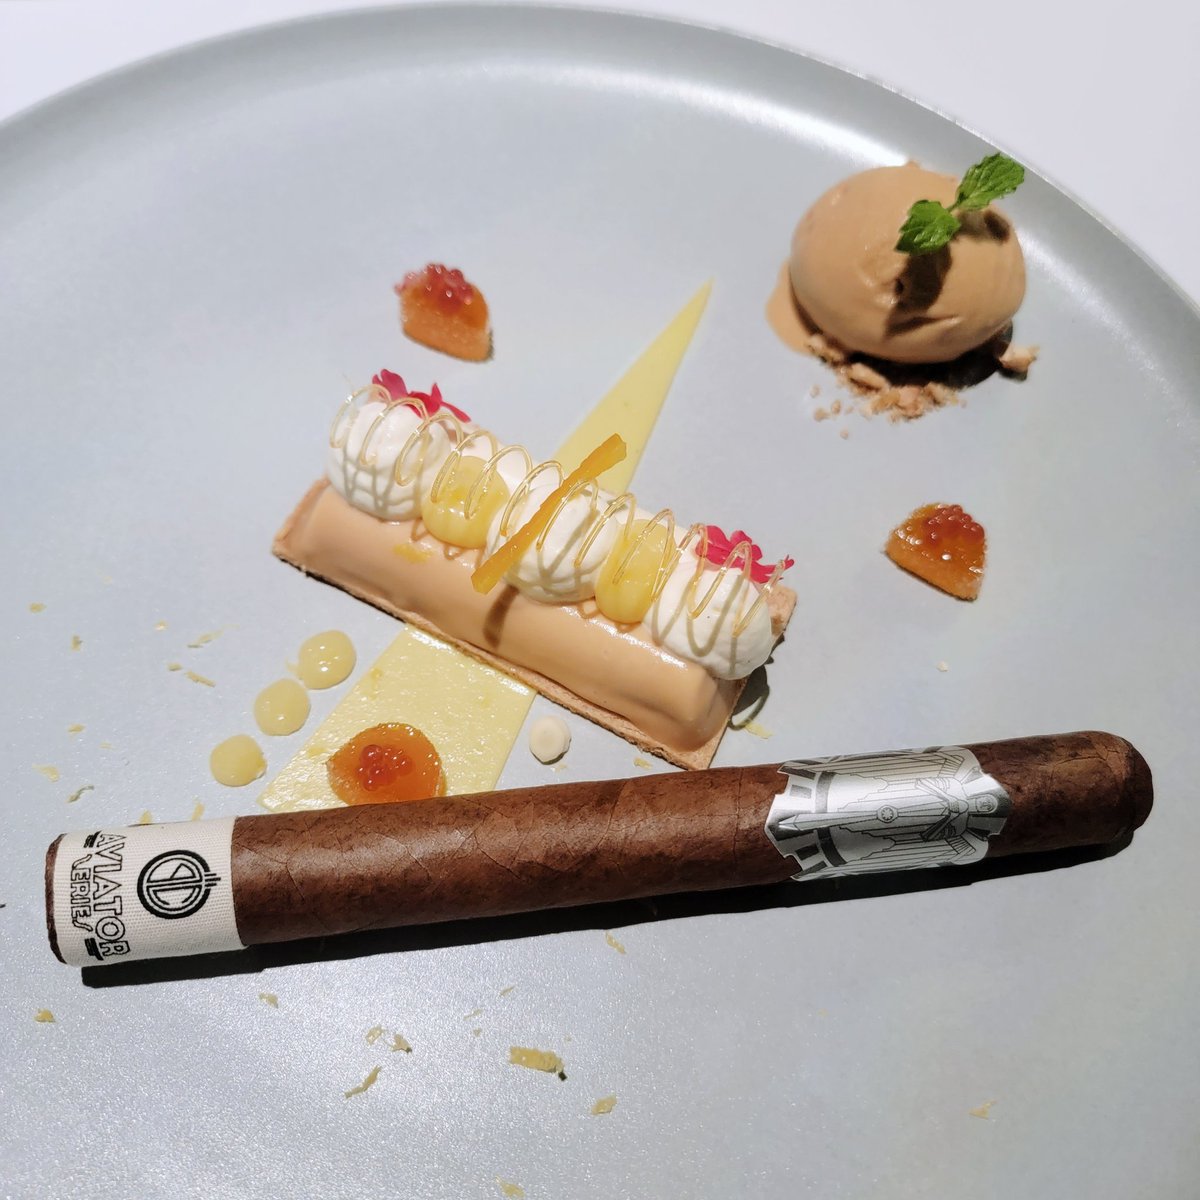 #TastyTuesday 
.
#Cigar #Cigars #PrincipleCigars #AviatorSeries #Patrie #시가 #Zigarre #葉巻 #сигара #BOTL #CigarLife #FoodLover #FoodPorn #Foodie #FoodPhotography #CigarSociety #CigarPorn #CigarSmoking #CigarWorld #CigarOfTheDay #CigarStyle #CigarSnob #CigarLover #Cerutu #Food